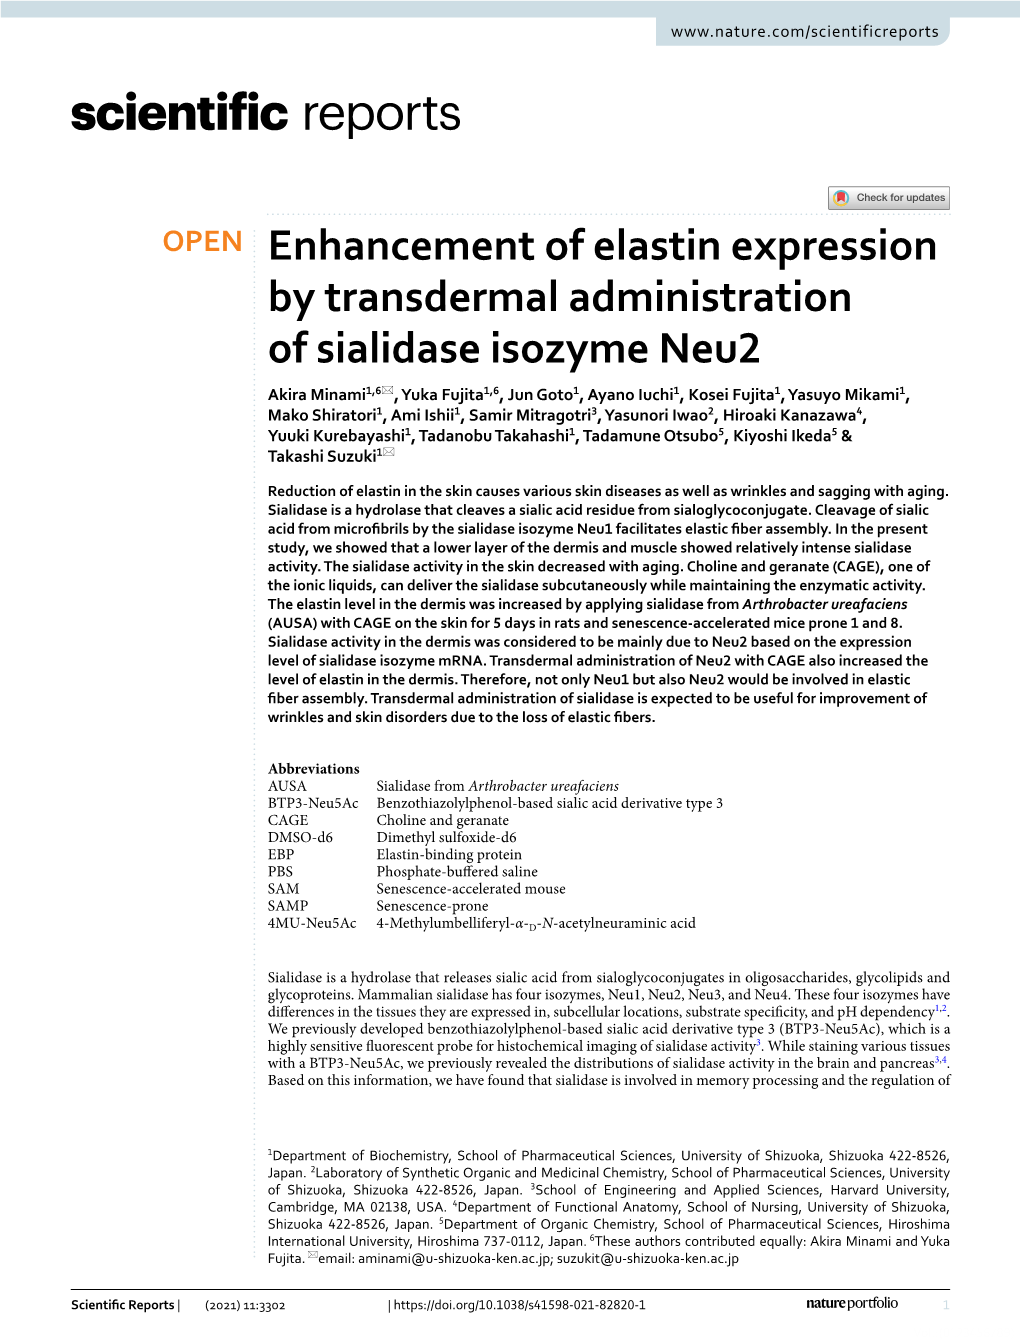 Enhancement of Elastin Expression by Transdermal Administration of Sialidase Isozyme Neu2